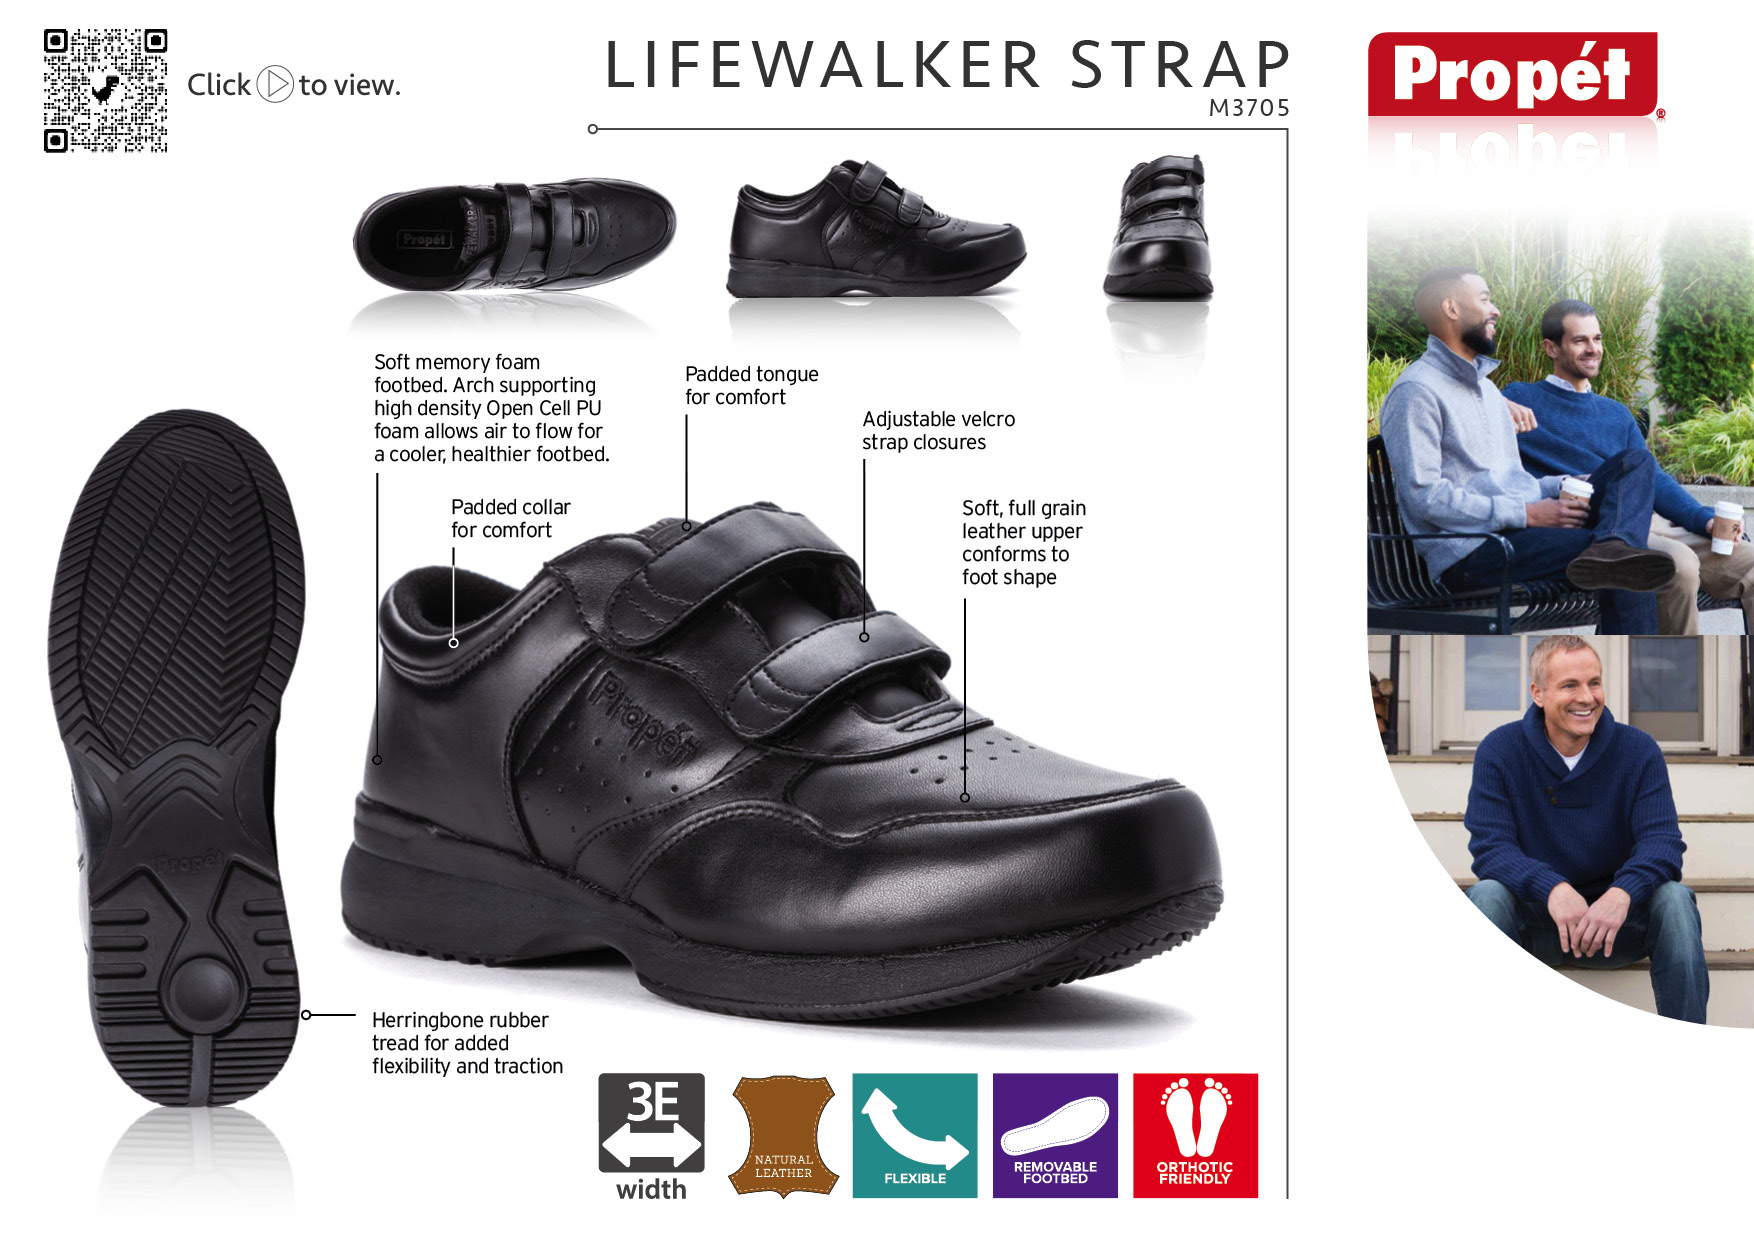 Lifewalker Strap M3705 Shoe Information Sheet